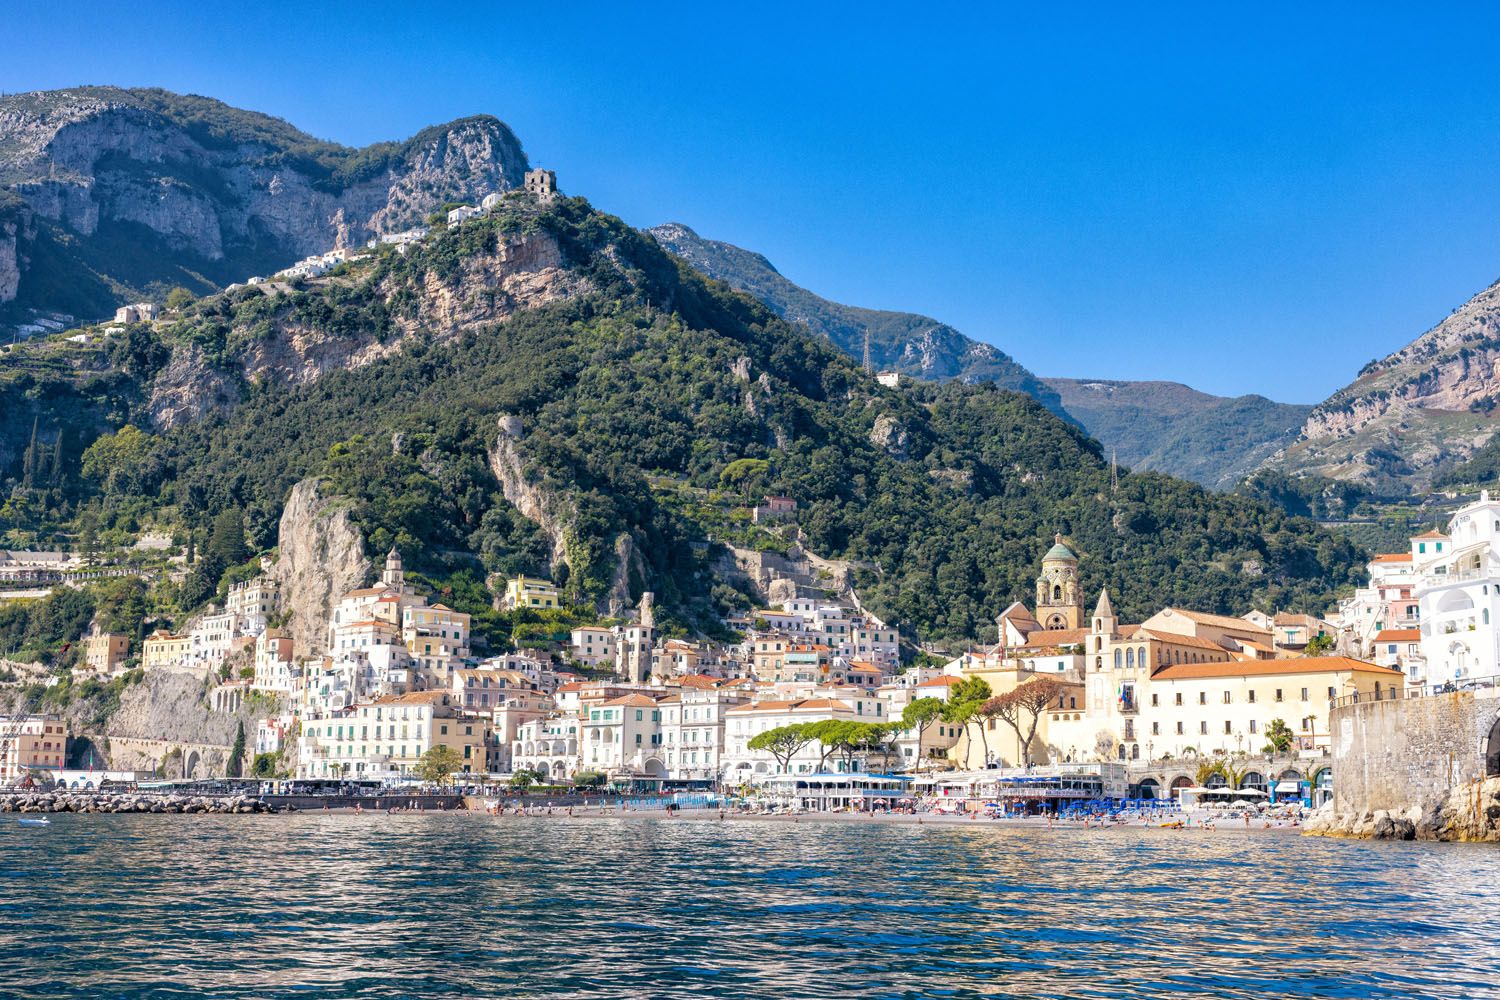 Amalfi Italy | Where to Stay on the Amalfi Coast